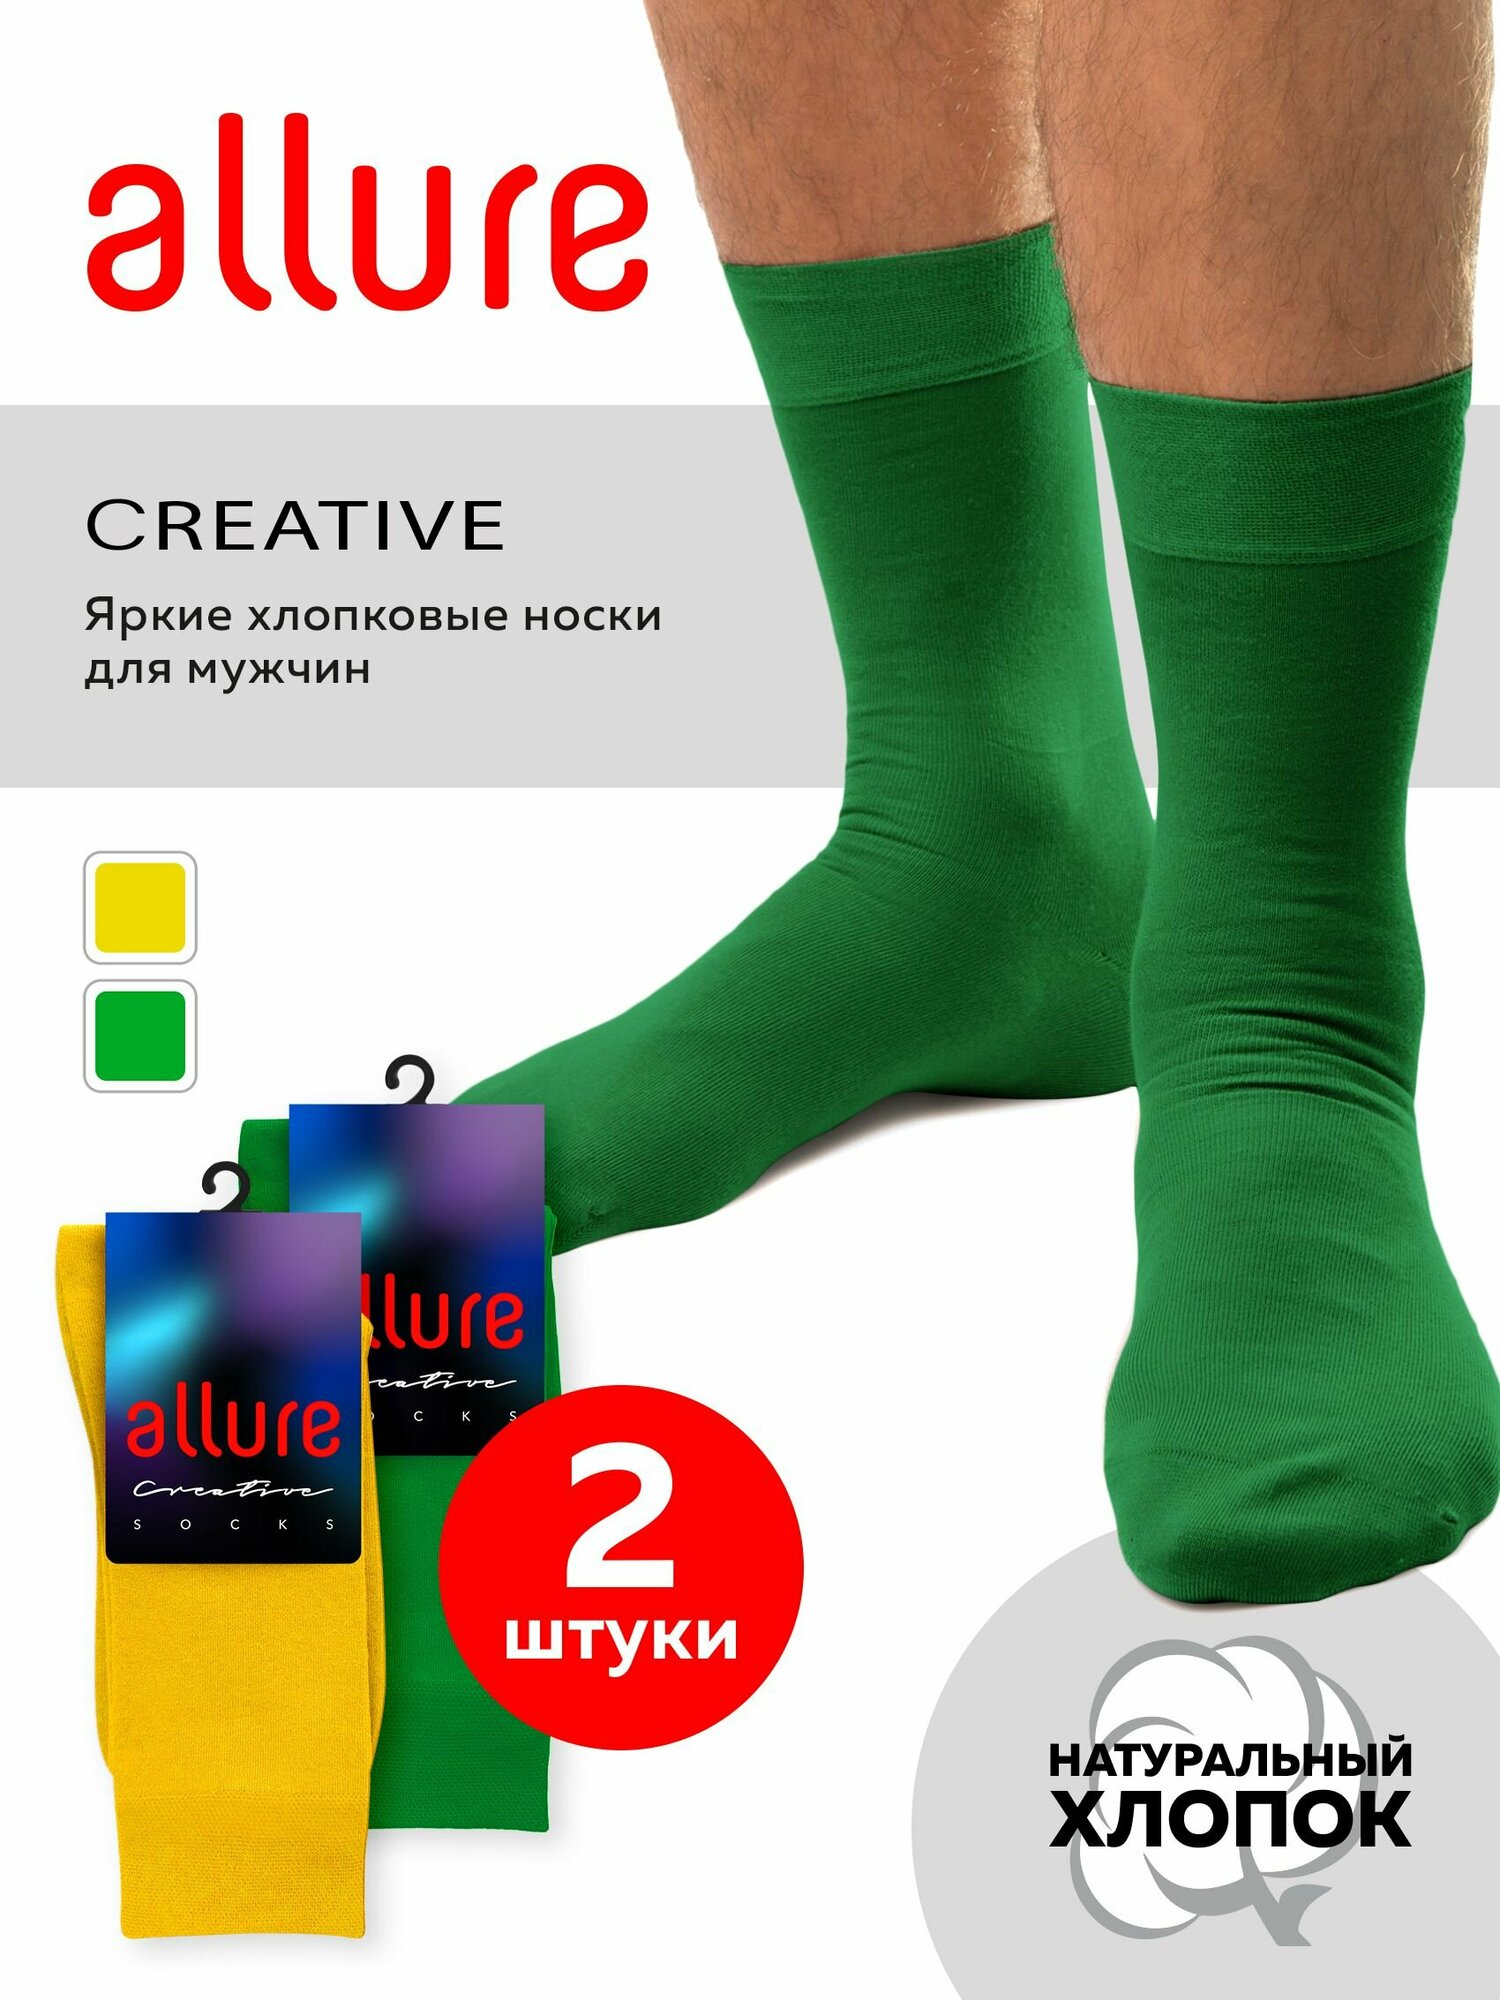 Носки ALLURE цветные носки, 2 пары, размер 42/44, желтый, зеленый